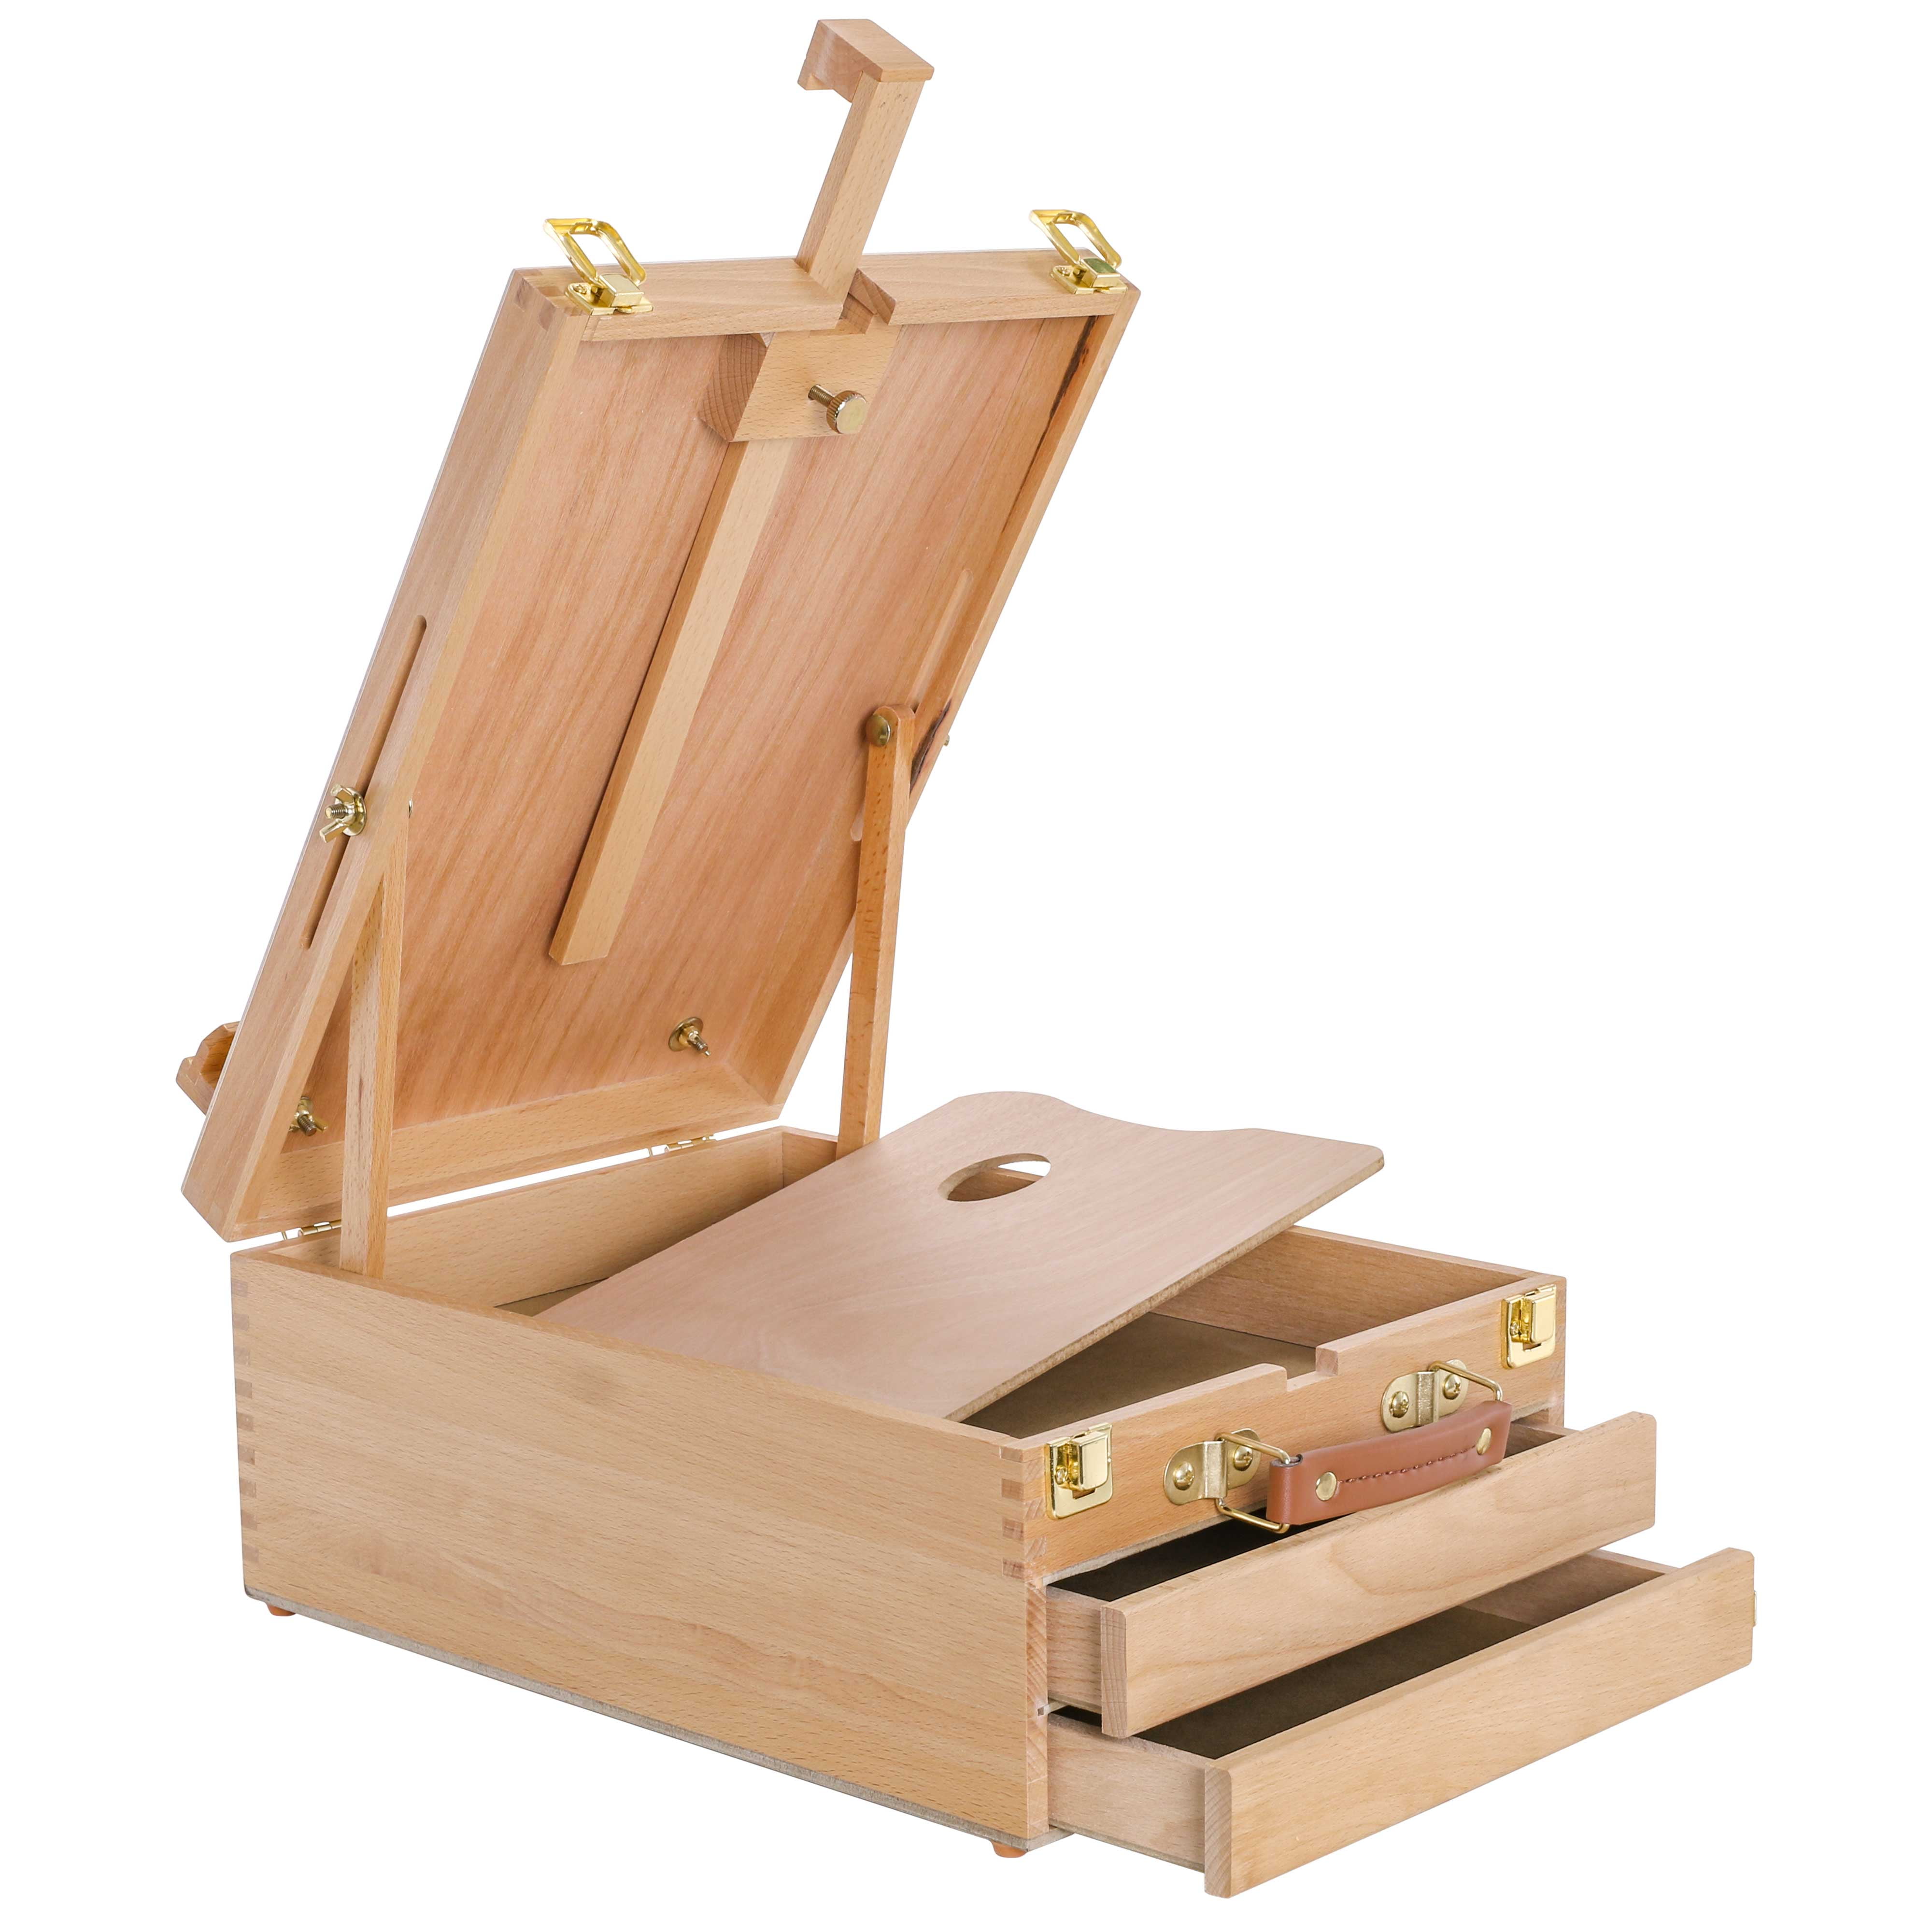 WOOD Vintage Artist TABLETOP Sketchbox EASEL,Beech Wood Sketch Box,Travel Easel Sketch Box,Portable Easel Stand Sketchbox,Uniqe Artist gift